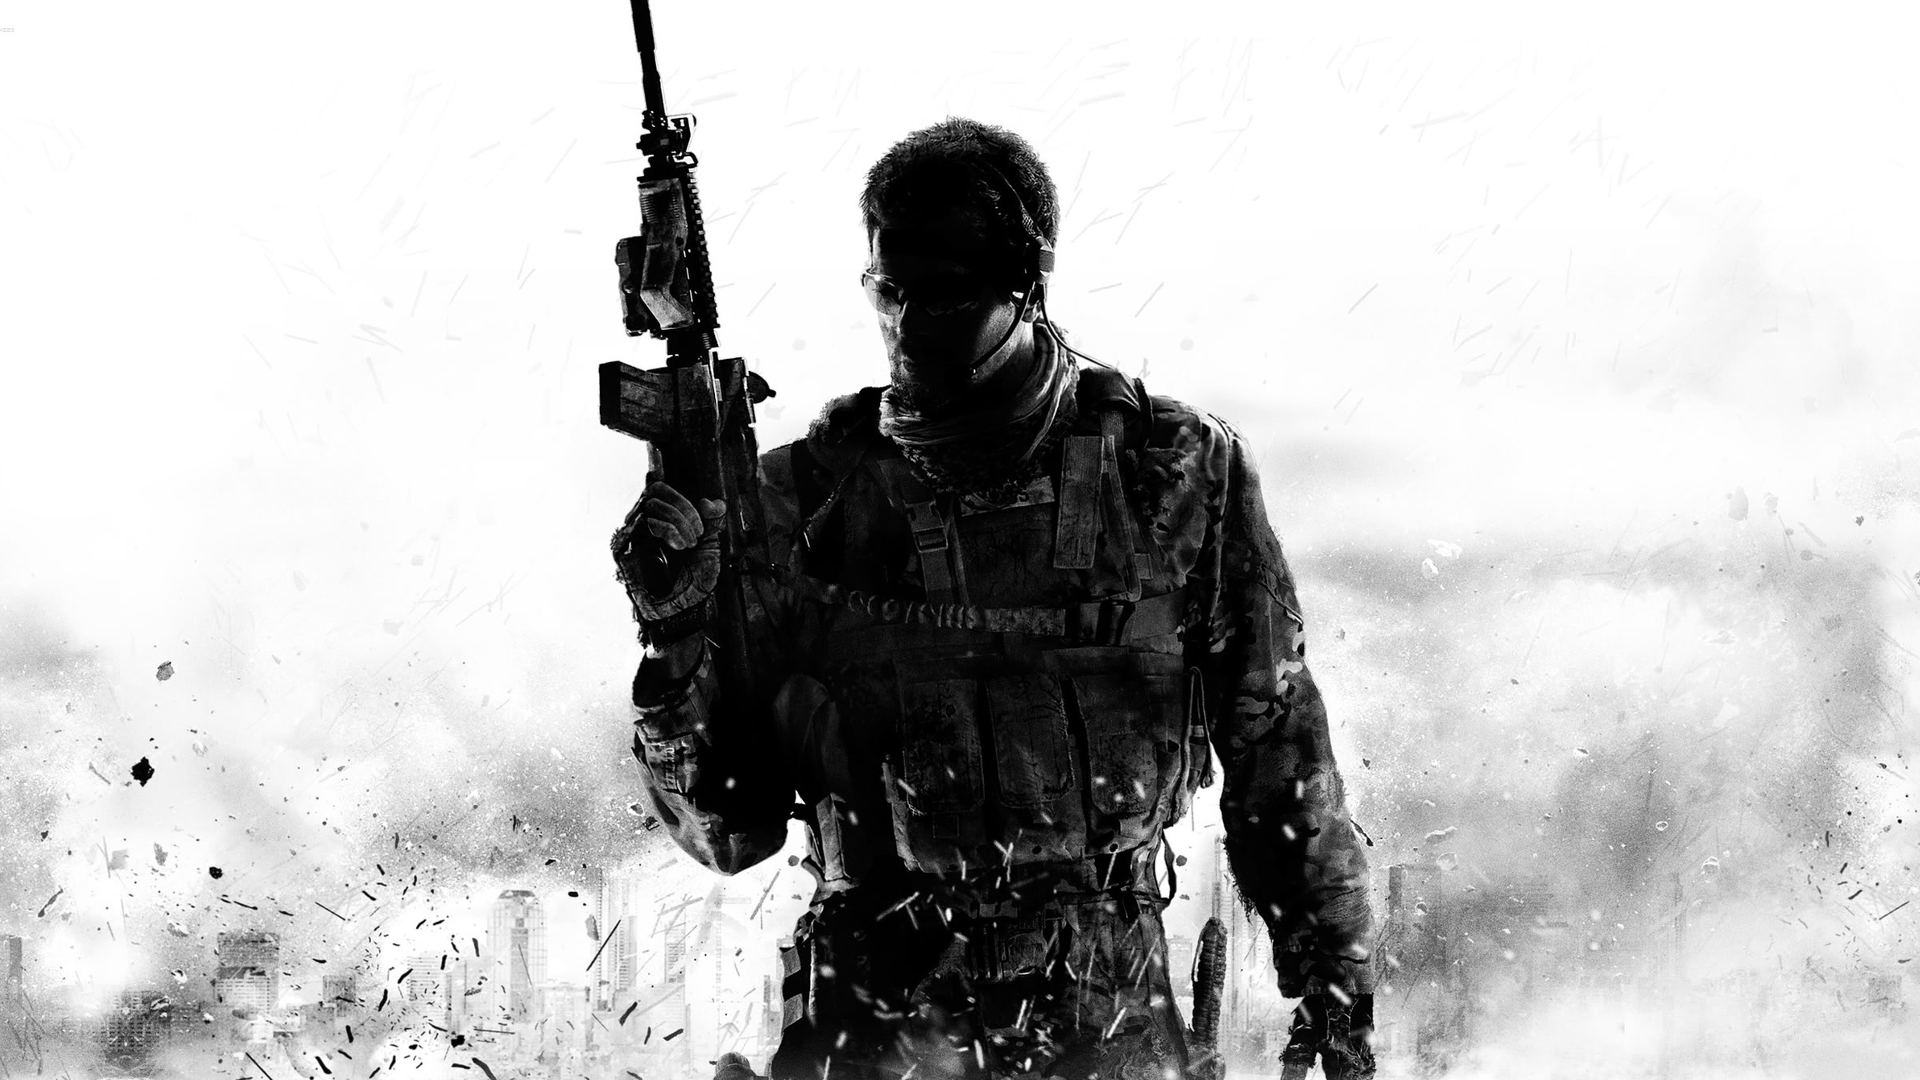 Call of Duty: Modern Warfare 3 HD Wallpaper and Background